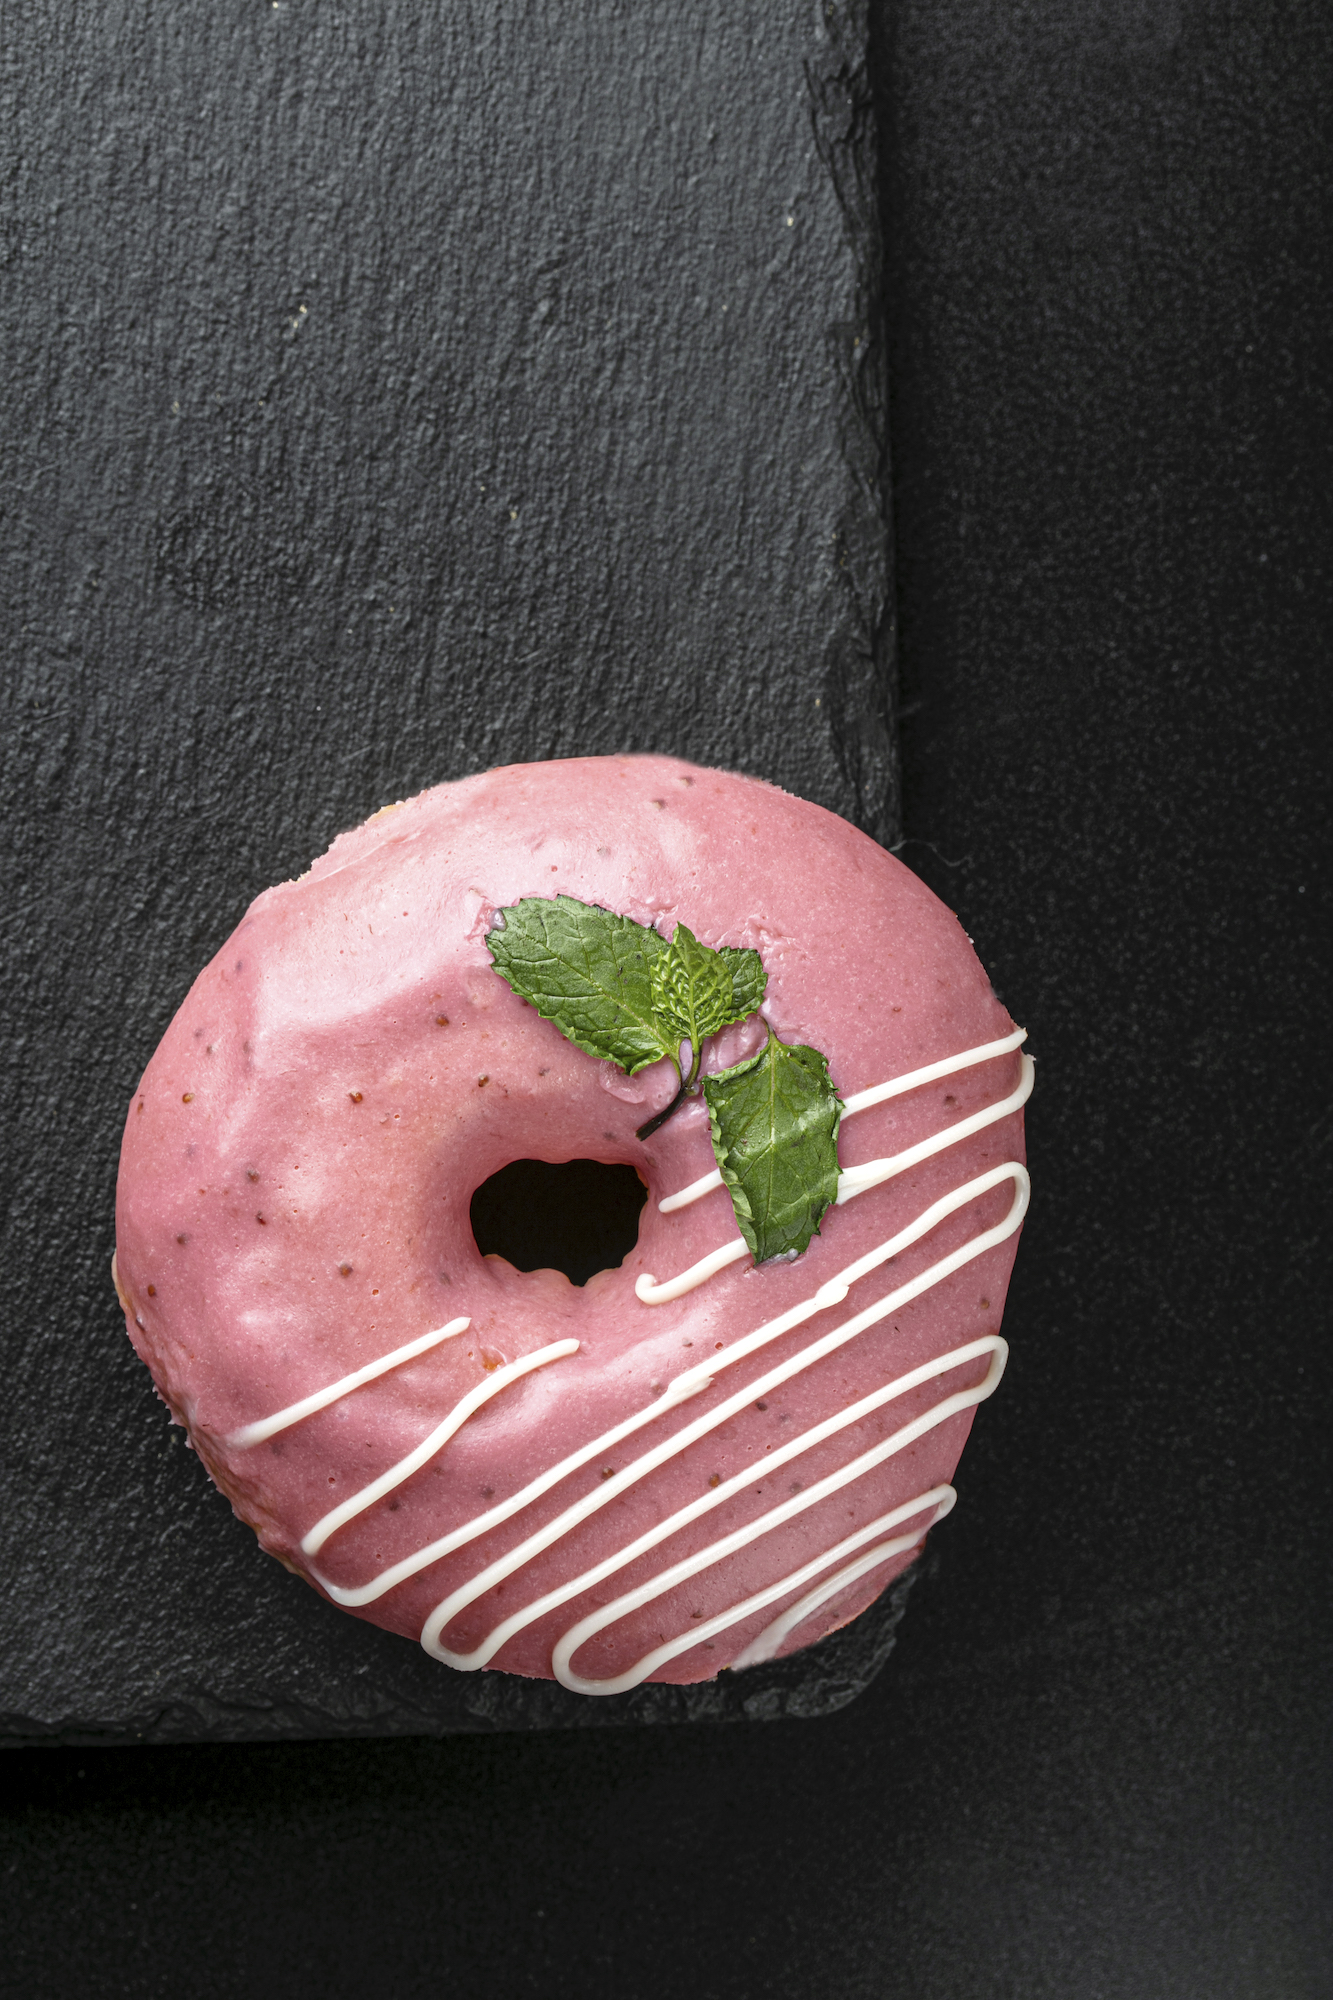 Breadlounge's white chocolate strawberry doughnut